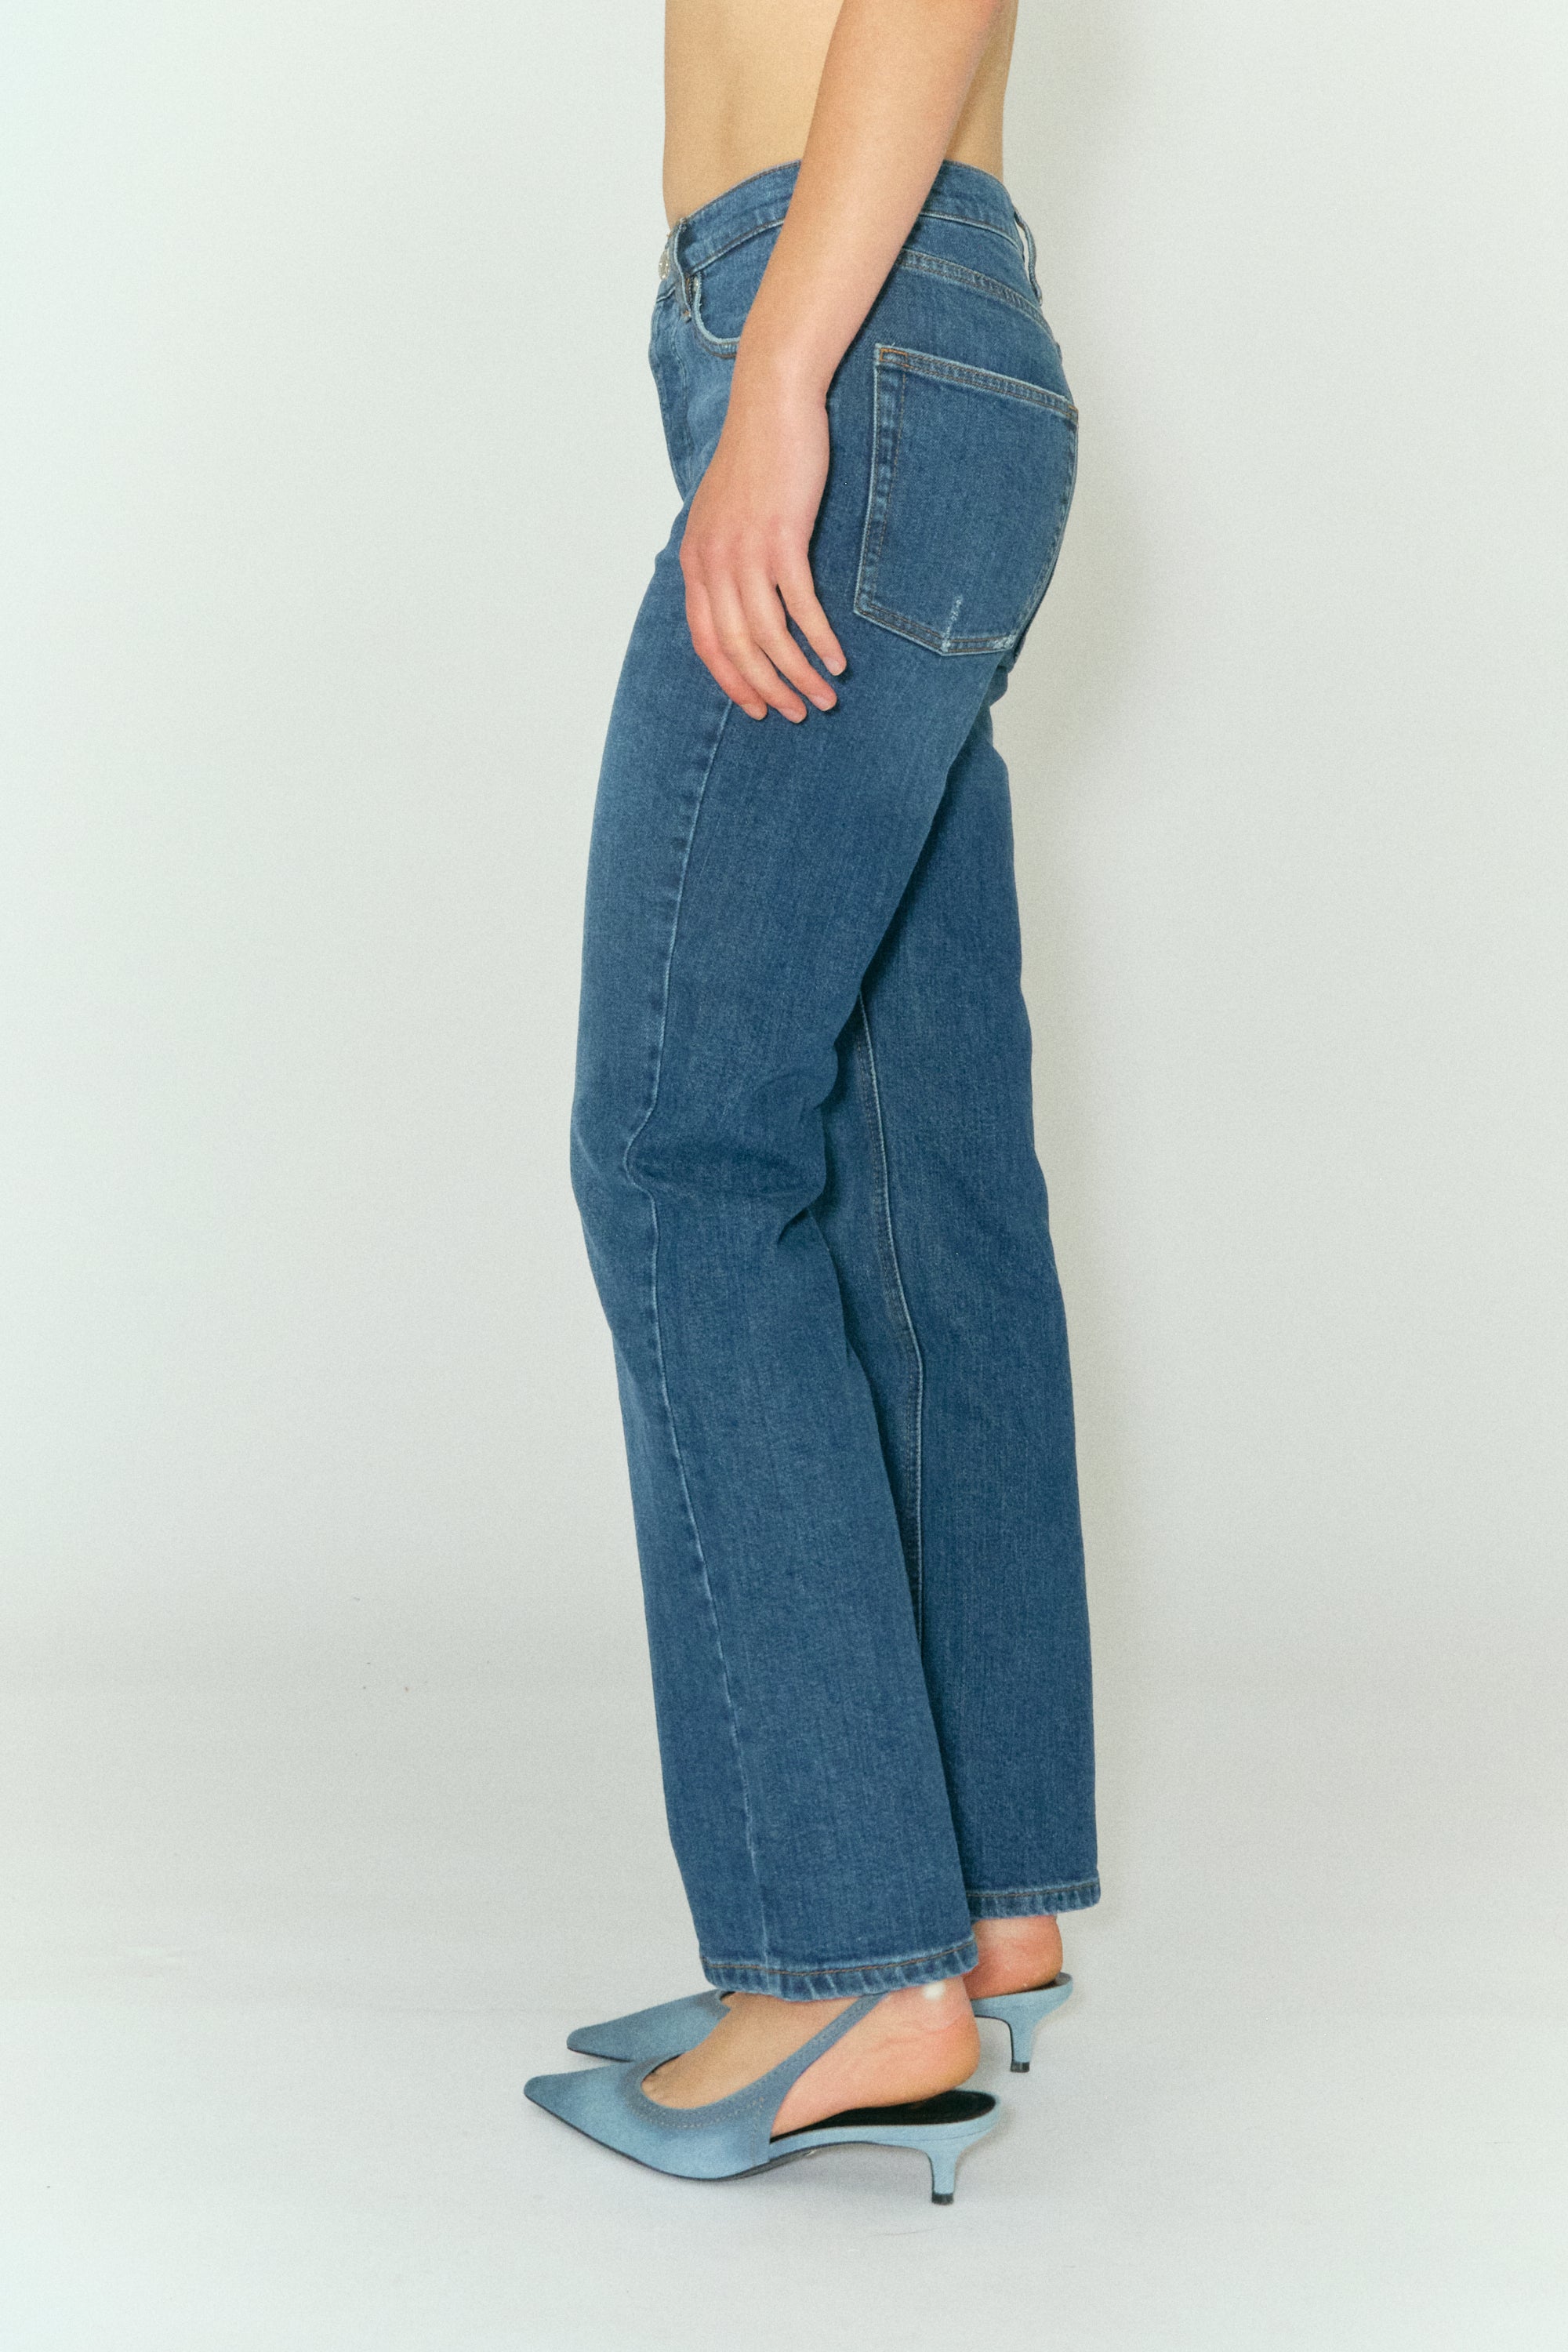 Tomorrow TMRW Marston Jeans - Original Key West Jeans & Pants 51 Denim Blue